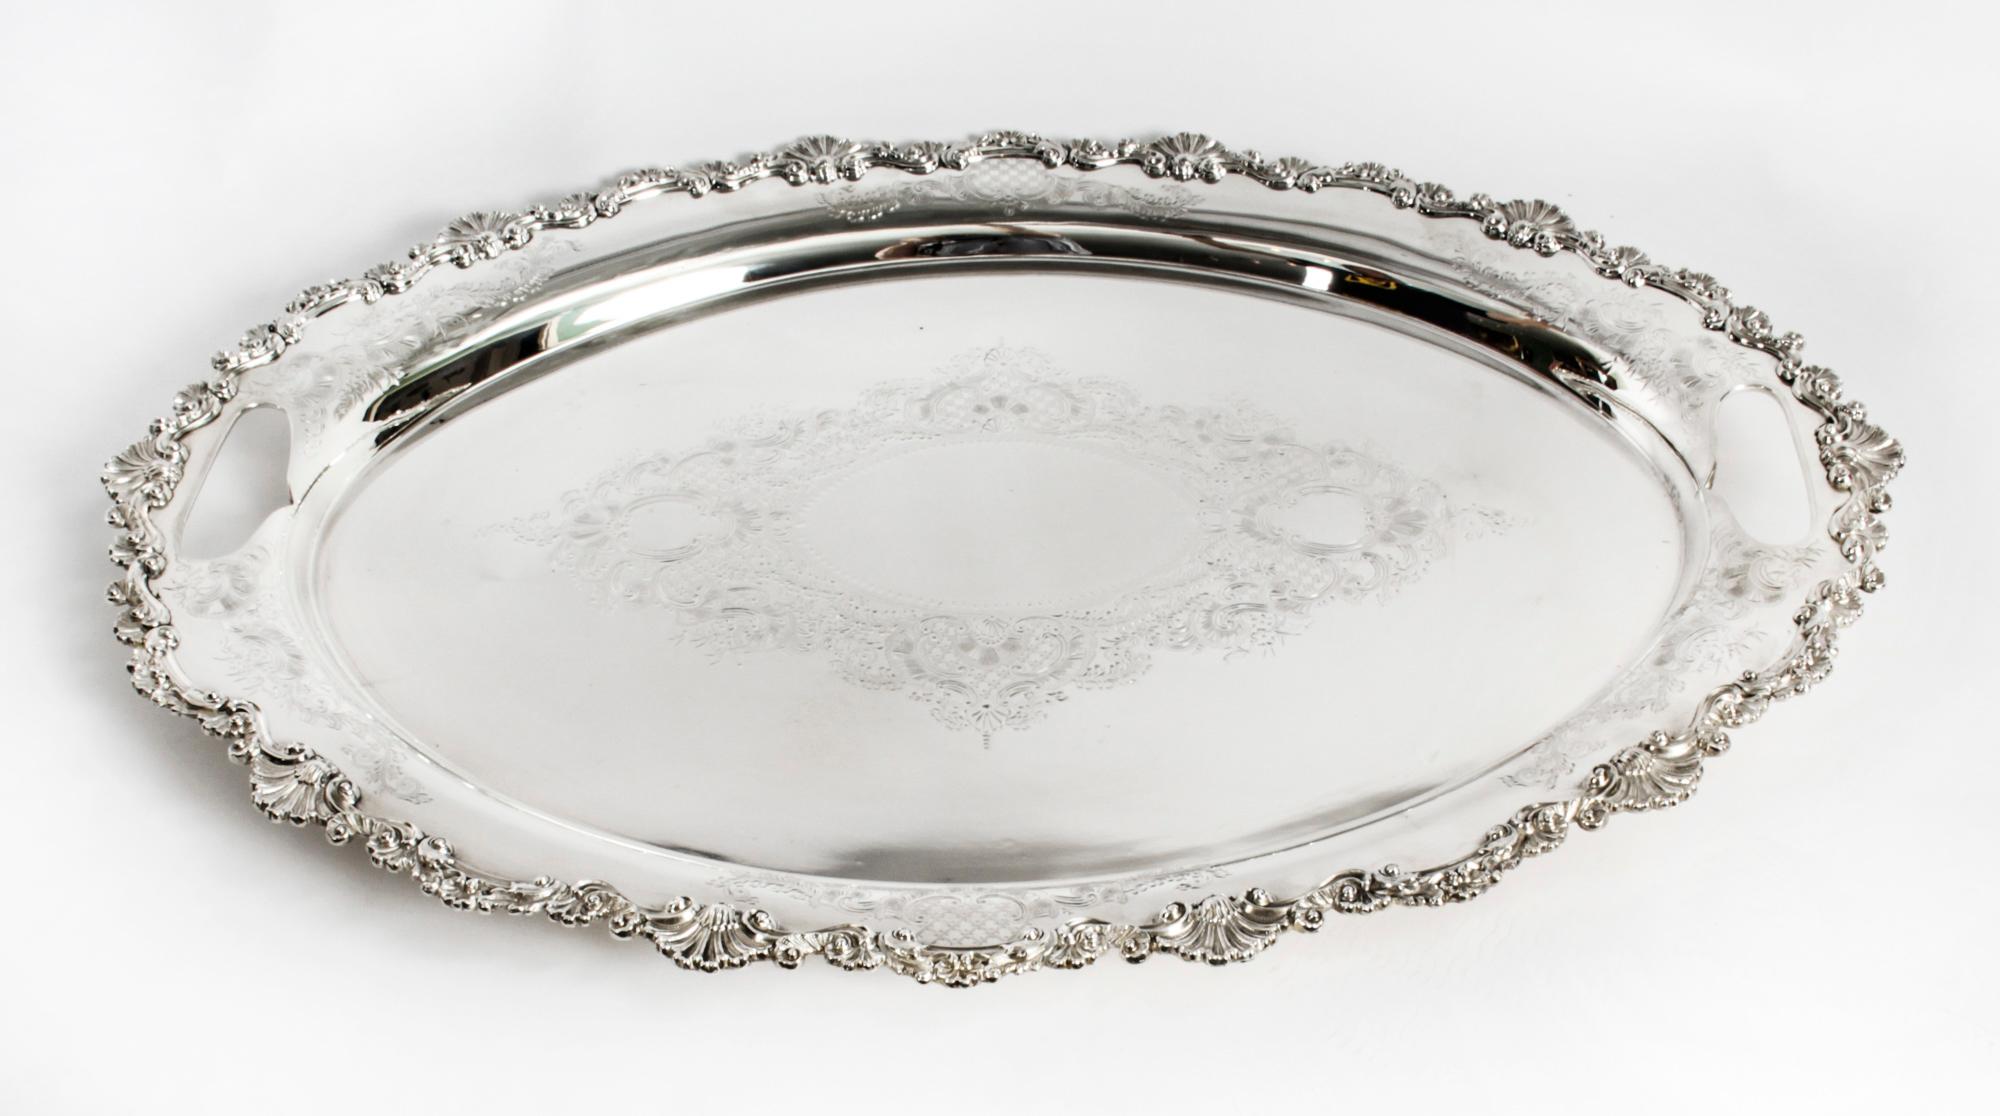 Northern Irish Antique Irish Silver Plated Oval Twin Handled Tray W. Gibson, 1870